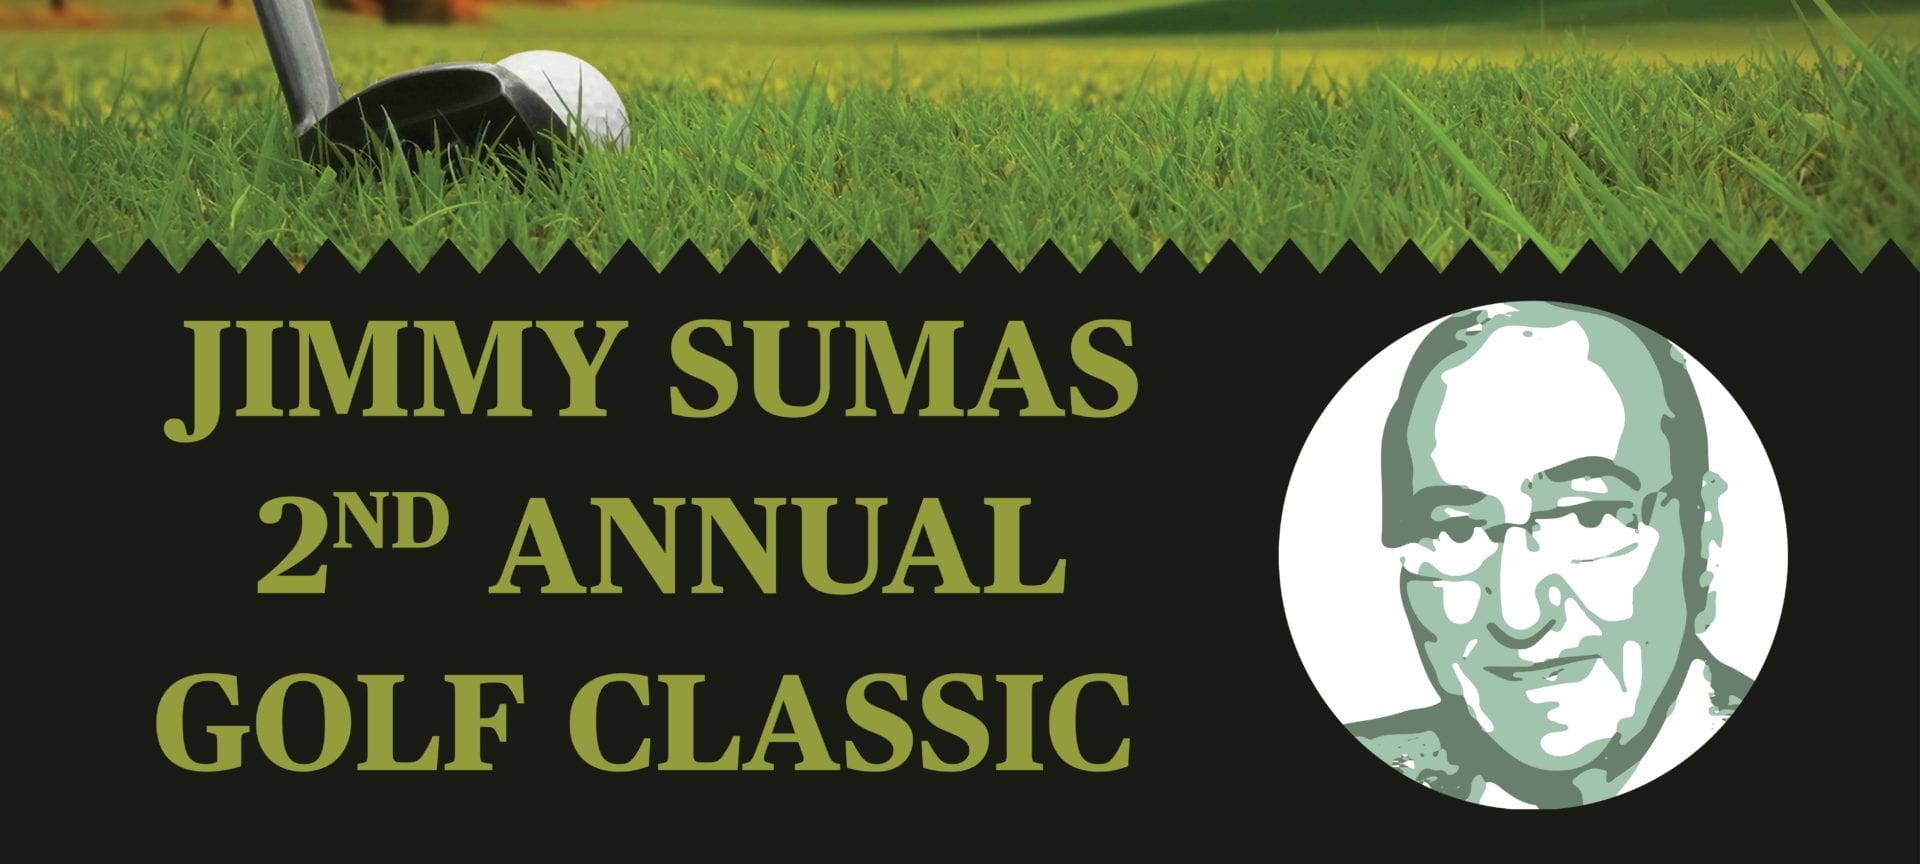 Jimmy Sumas 2nd Annual Golf Classic